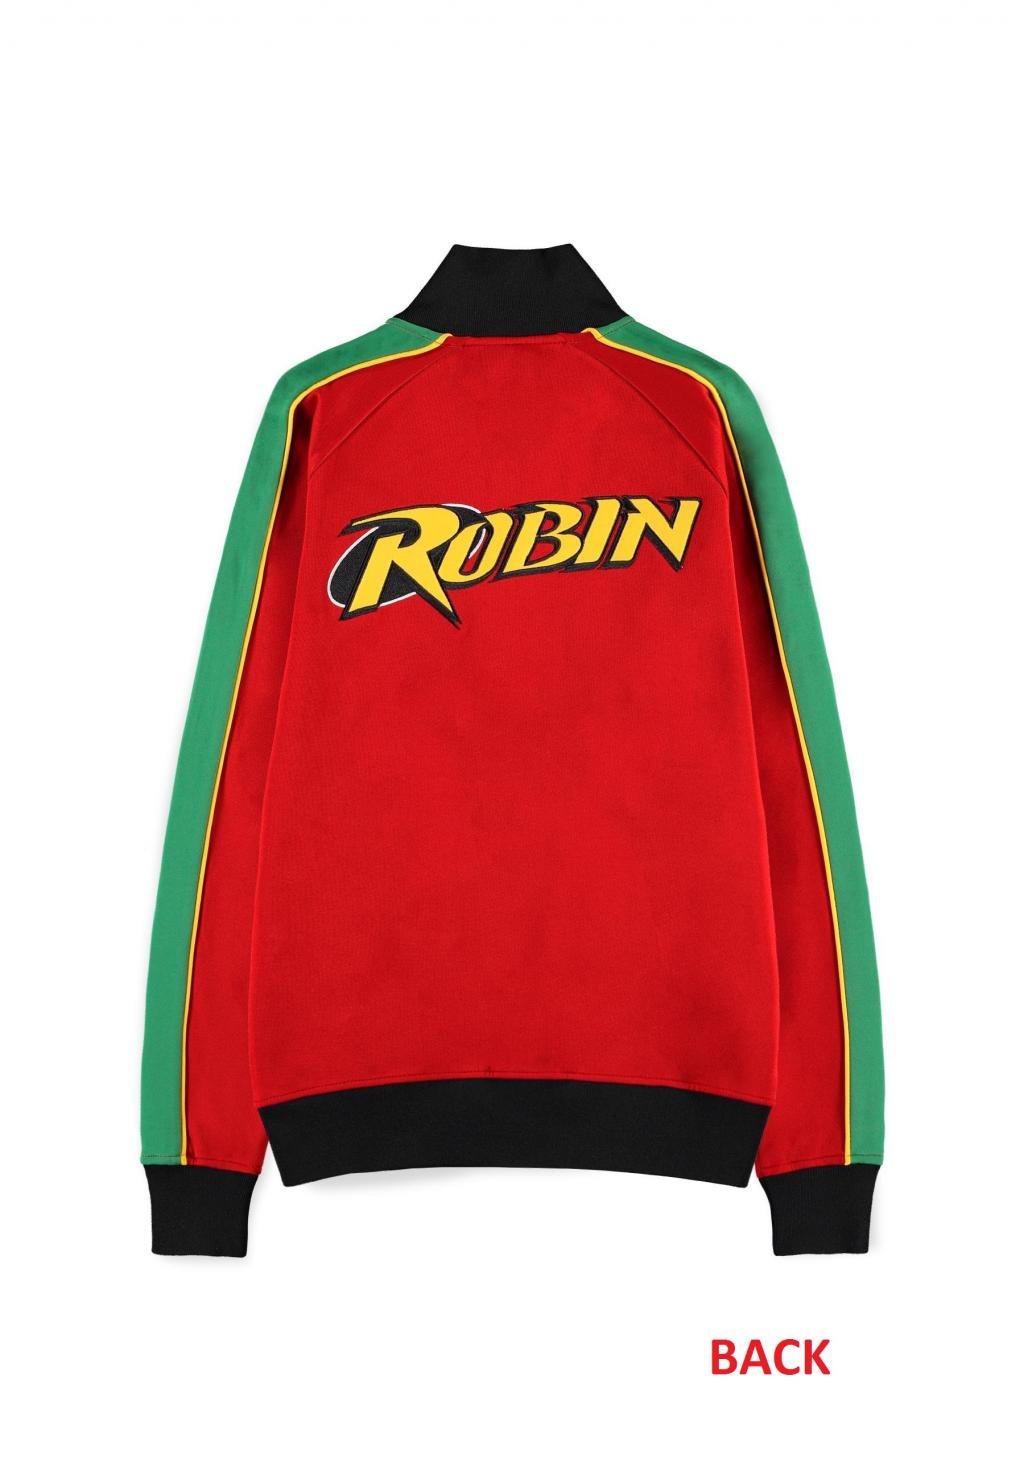 GOTHAM KNIGHTS - Robin - Men's Jacket (S)